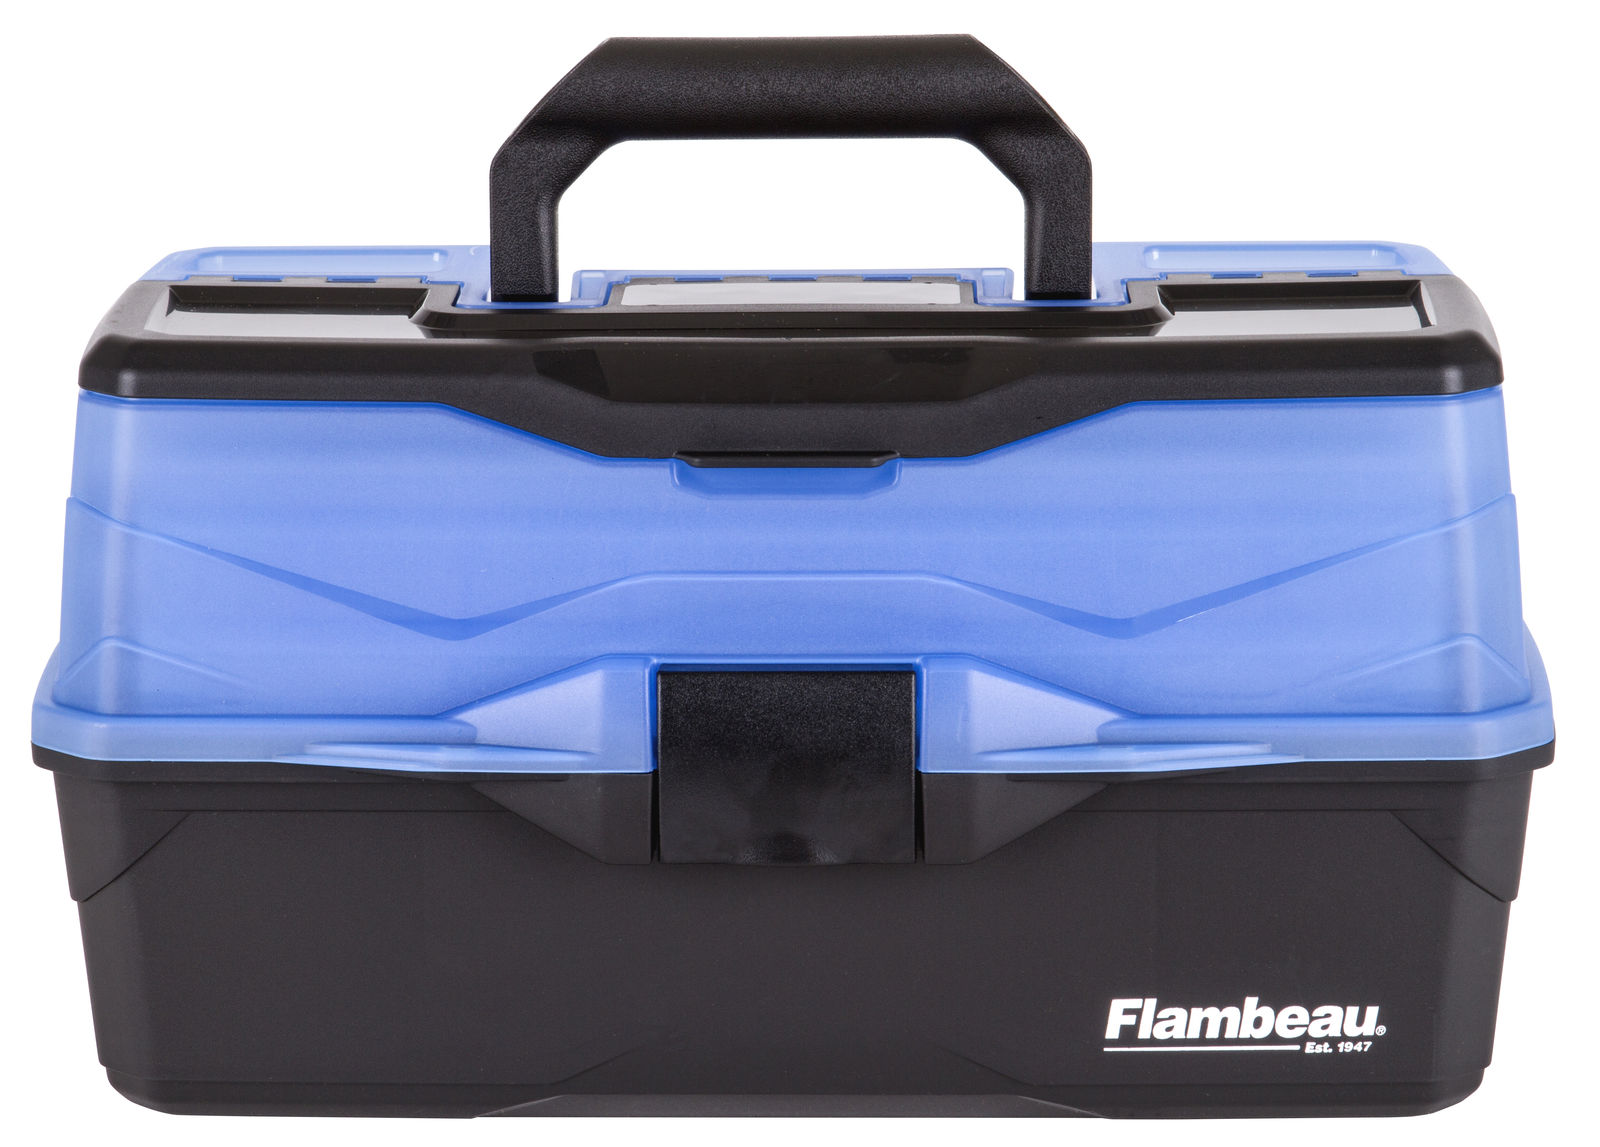 Flambeau Classic Fishing Tray - Classic 3-Tray Frost Series Blue